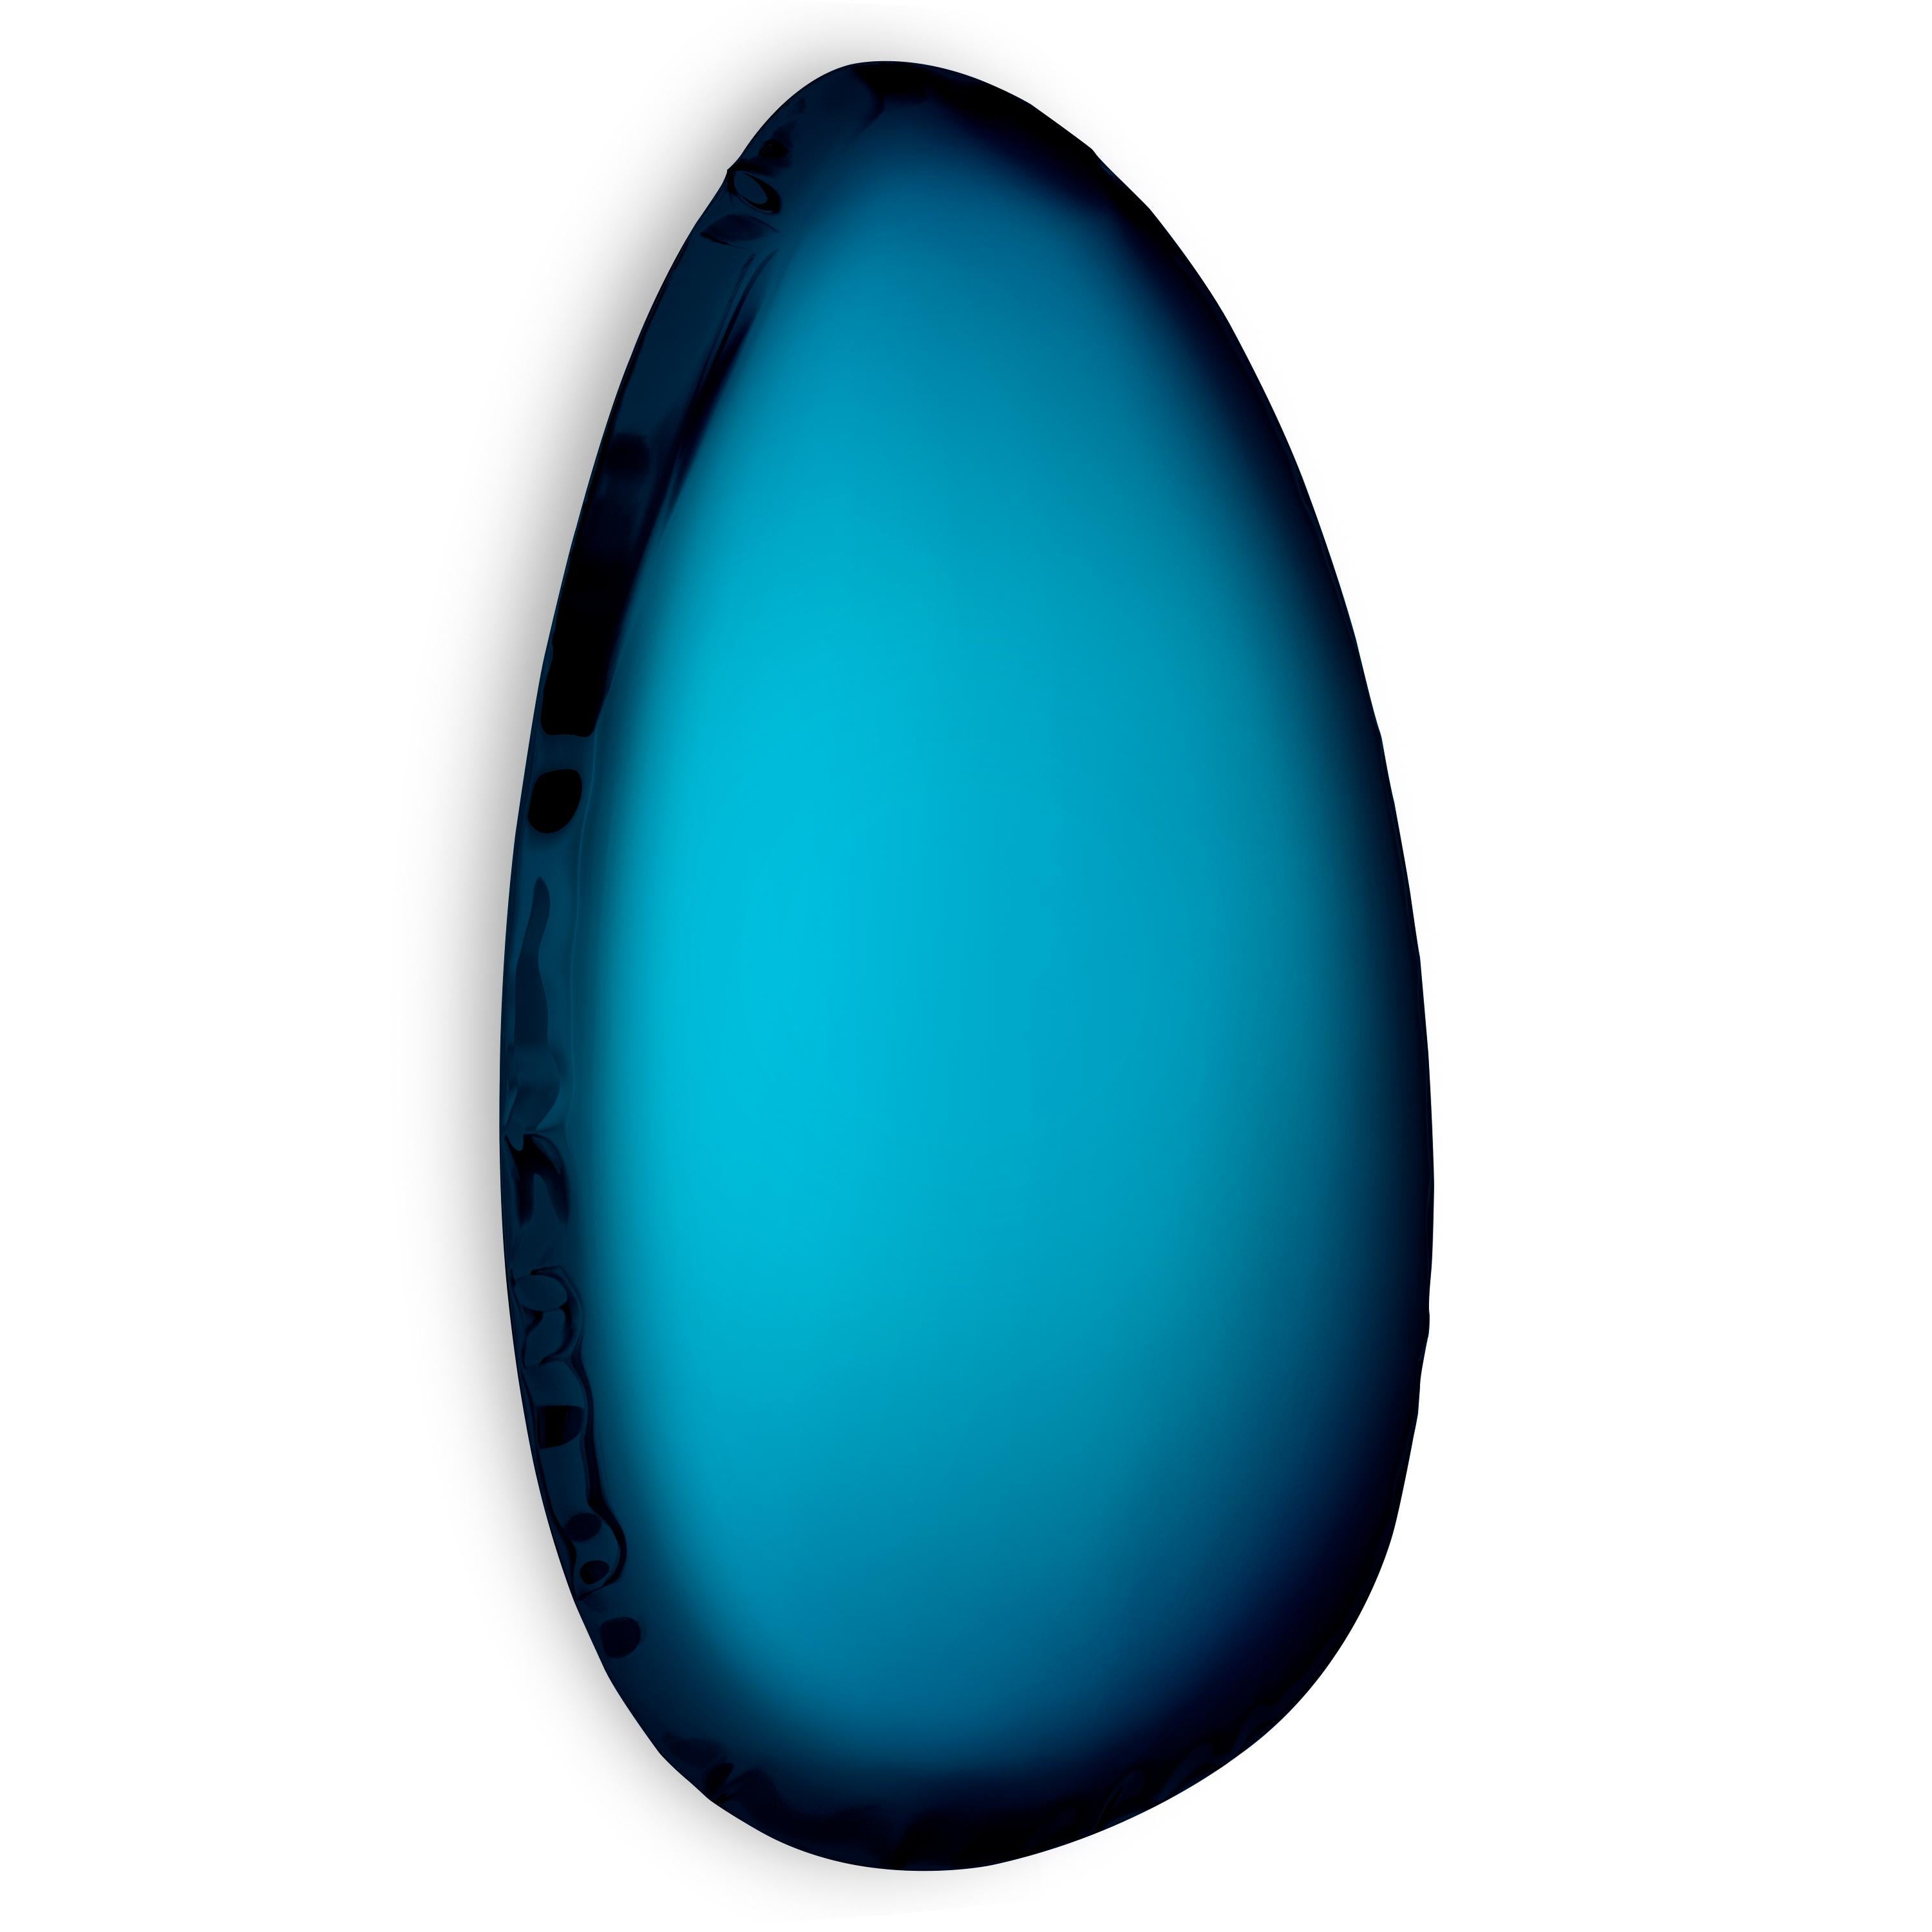 Deep space blue Tafla O4.5 wall mirror by Zieta
Dimensions: D 6 x W 57 x H 86 cm 
Material: Stainless steel.
Finish: Deep space blue. 
Available finishes: Stainless steel, white matt, sapphire/emerald, sapphire, emerald, deep space blue, dark